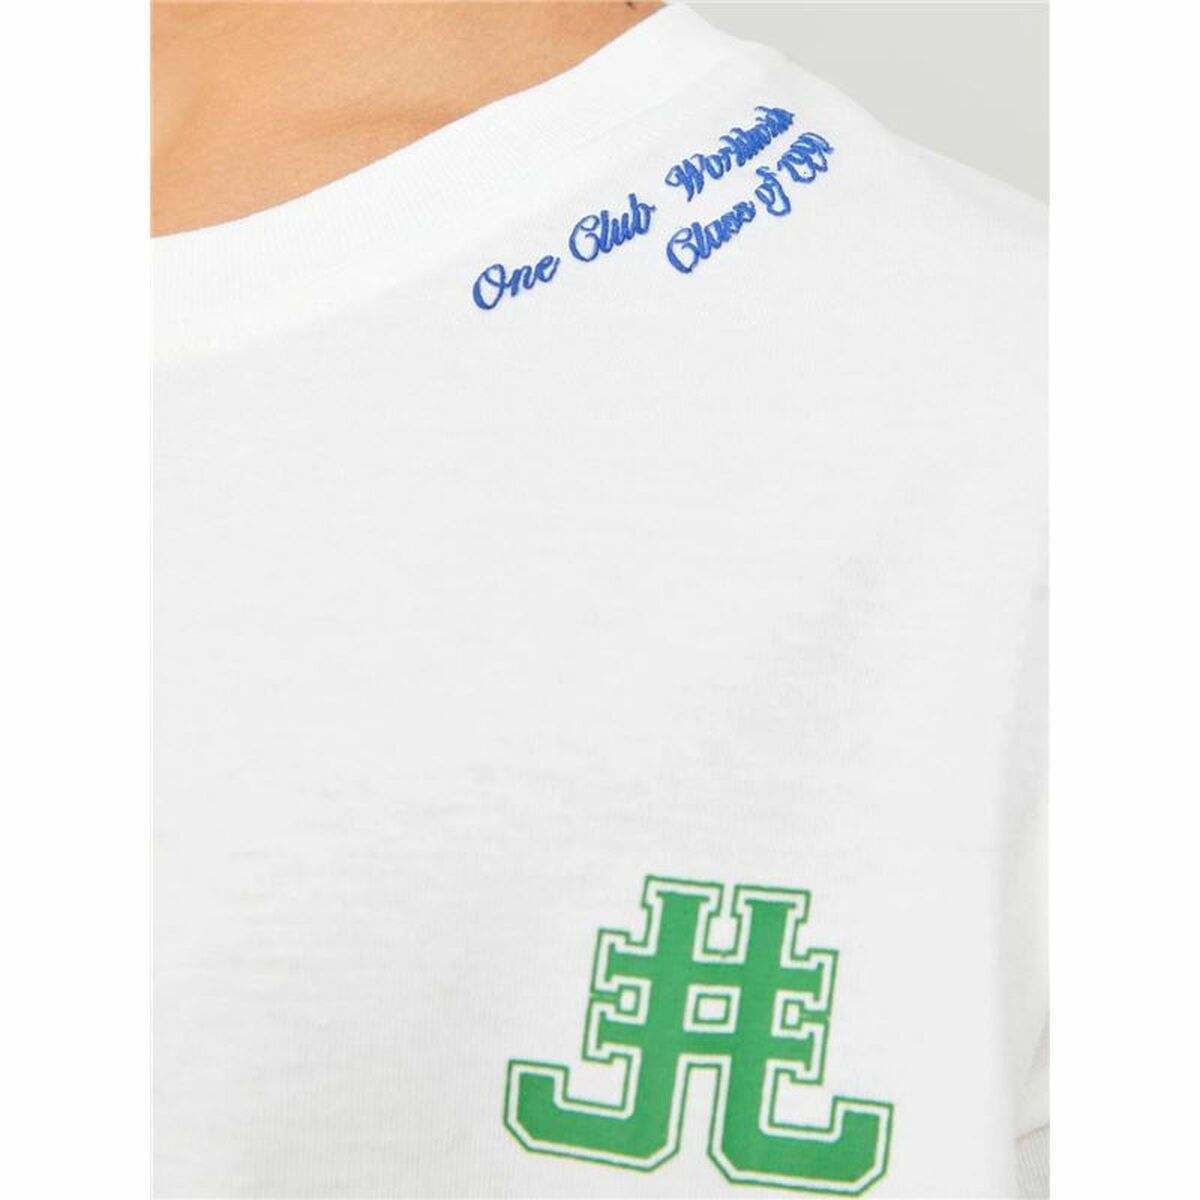 T shirt à manches courtes Enfant Jack & Jones Jorcole Back Print Blanc Vert - Jack & Jones - Jardin D'Eyden - jardindeyden.fr